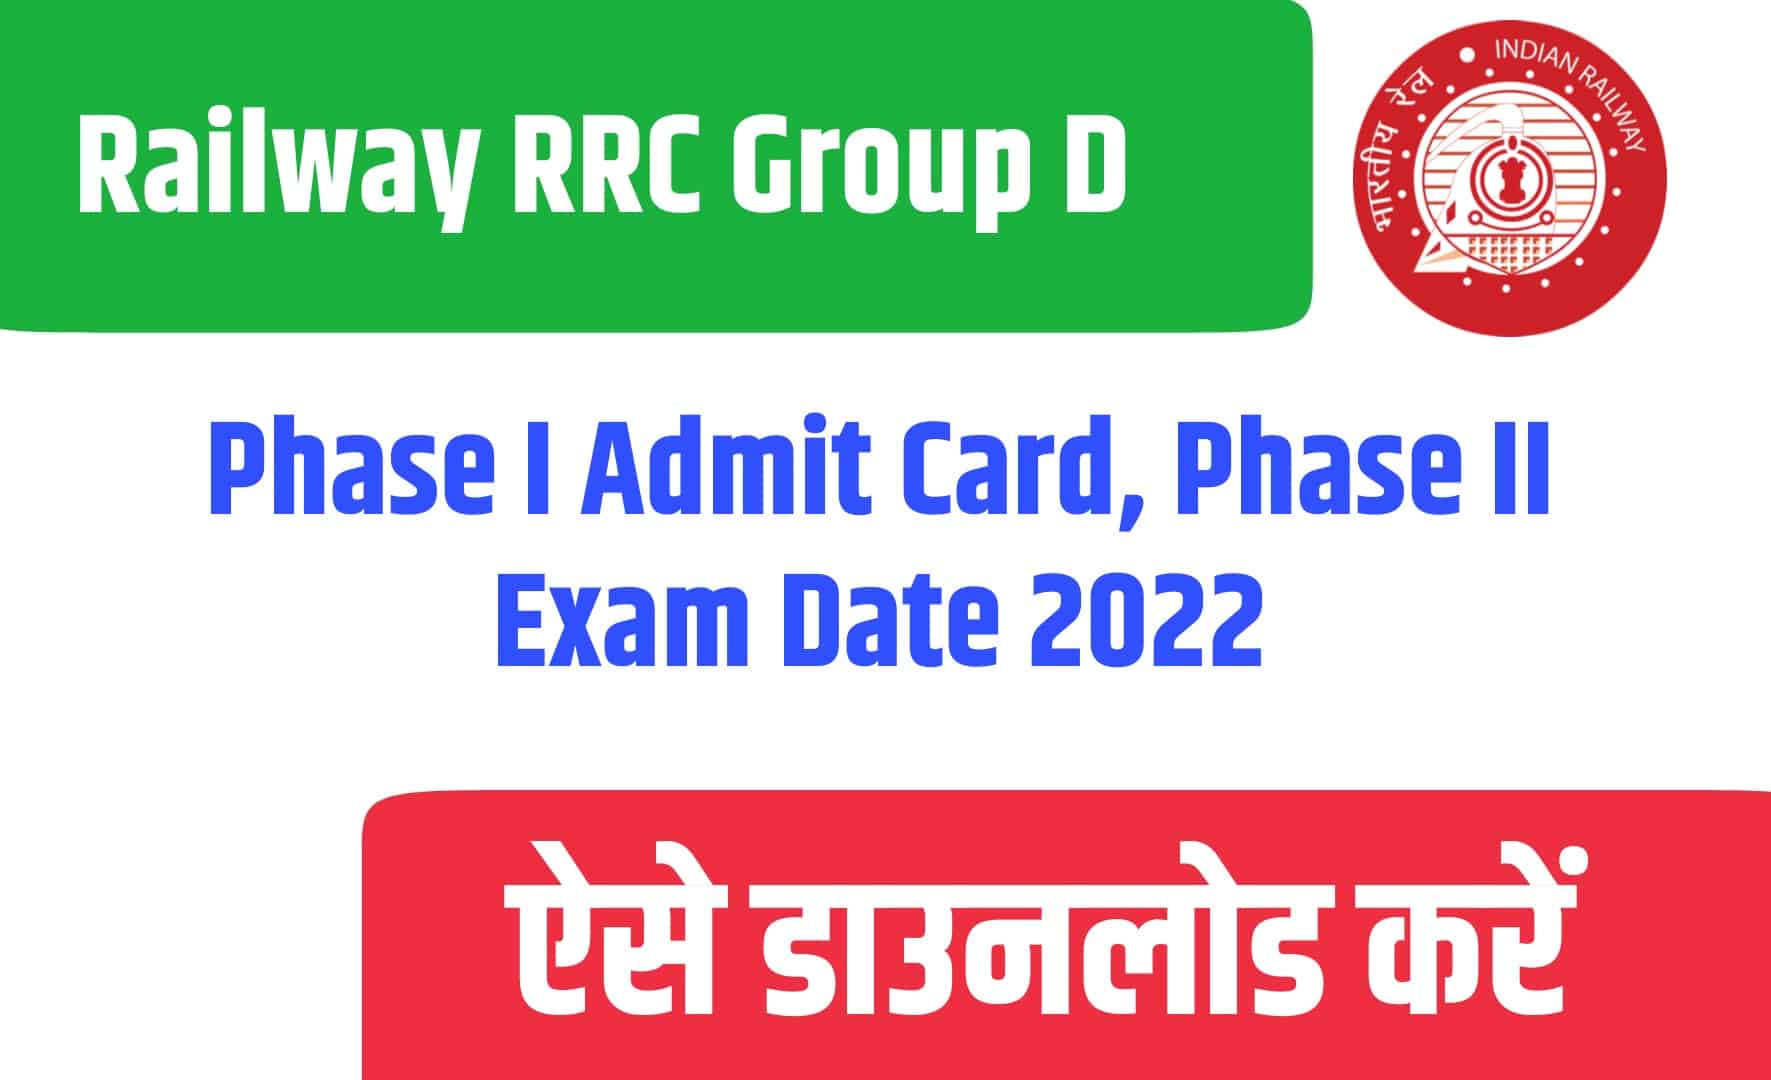 Railway RRC Group D Phase I Admit Card, Phase II Exam City 2022